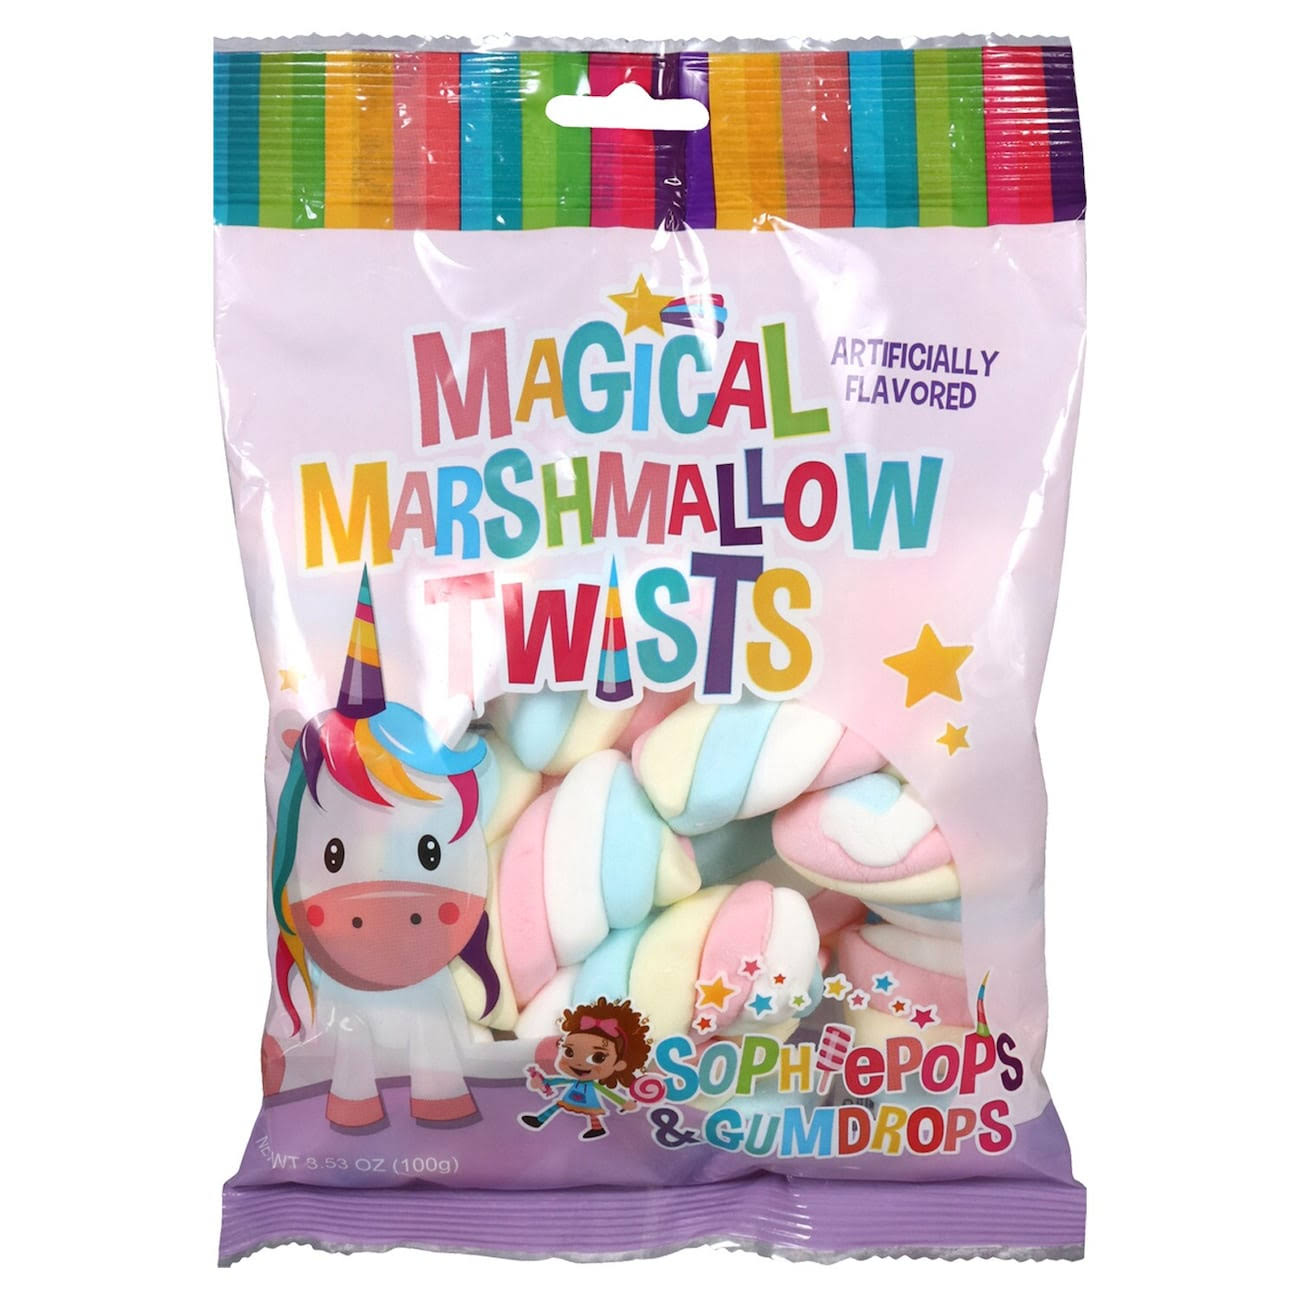 Dollar Tree SHOPIEPOPS & Gumdrops Magical Marshmallow Twists